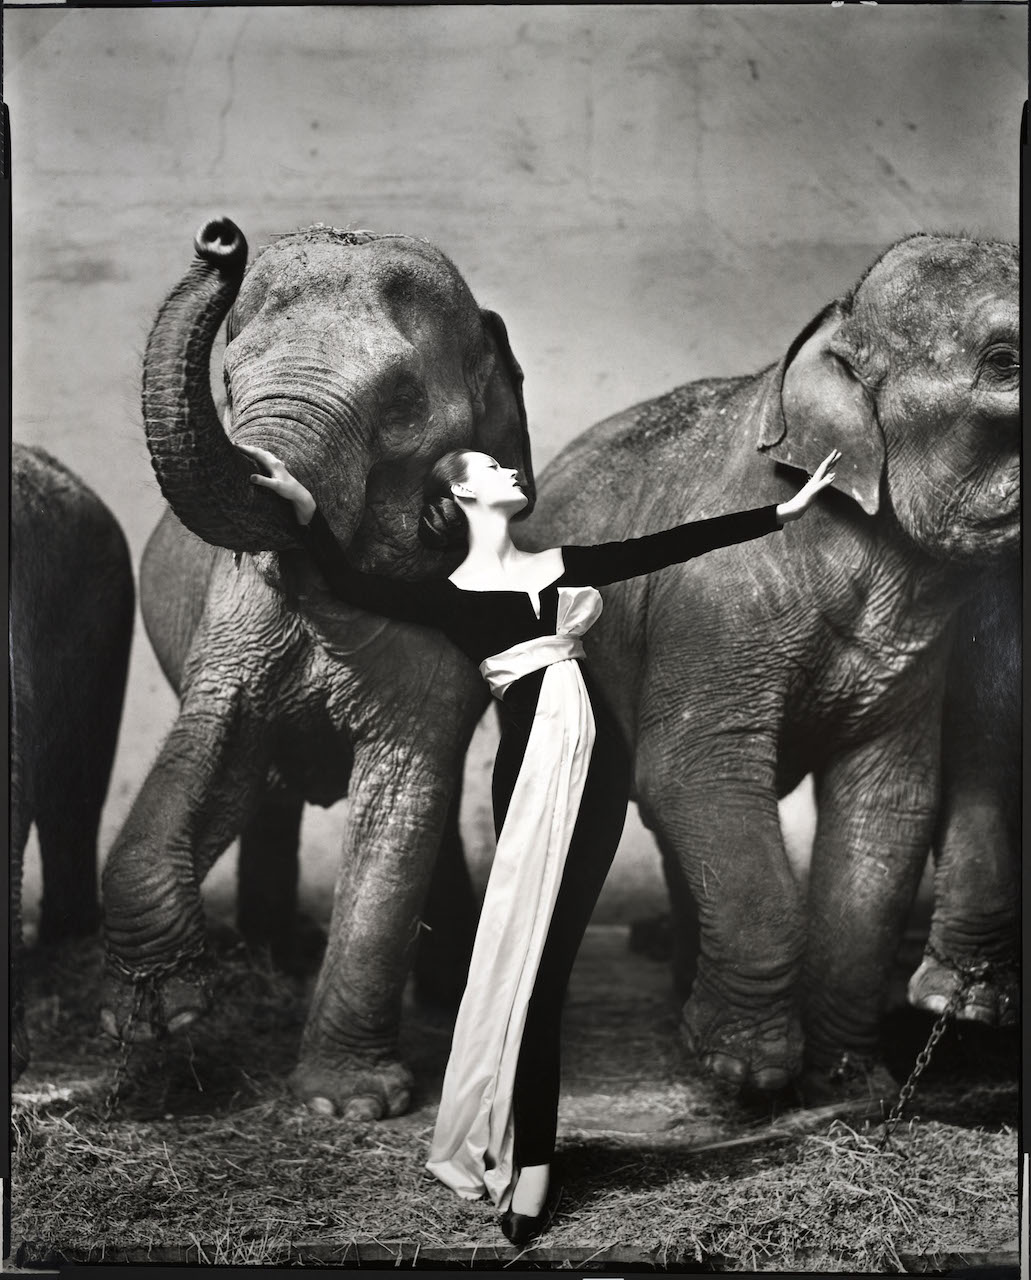 Richard Avedon, Dovima with elephants, evening dress by Dior, Cirque d'Hiver, Paris, August 1955 © The Richard Avedon Foundation